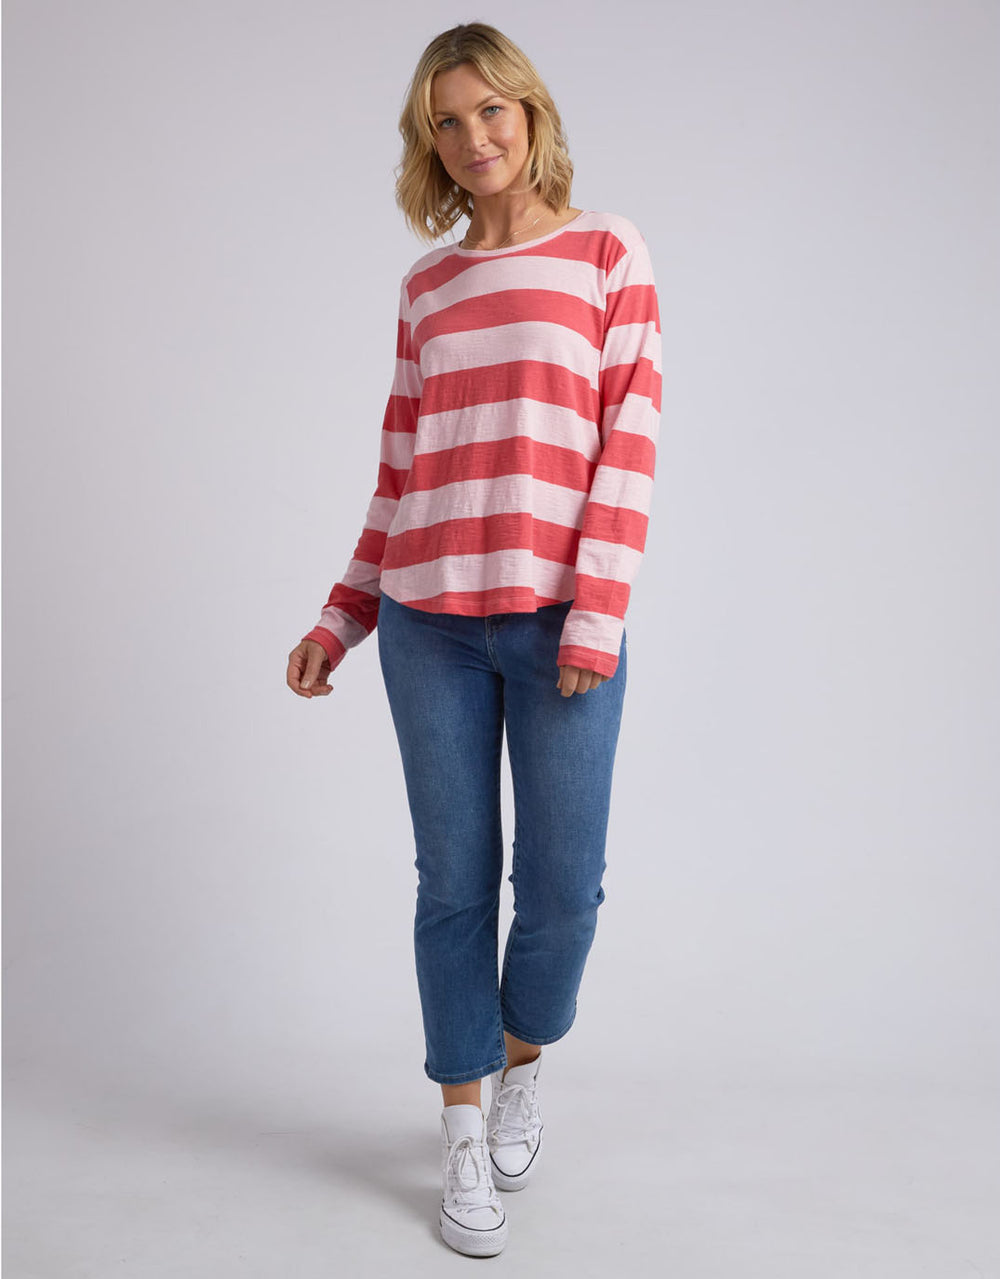 elm-spritz-stripe-long-sleeve-tee-coral-spritz-stripe-womens-clothing